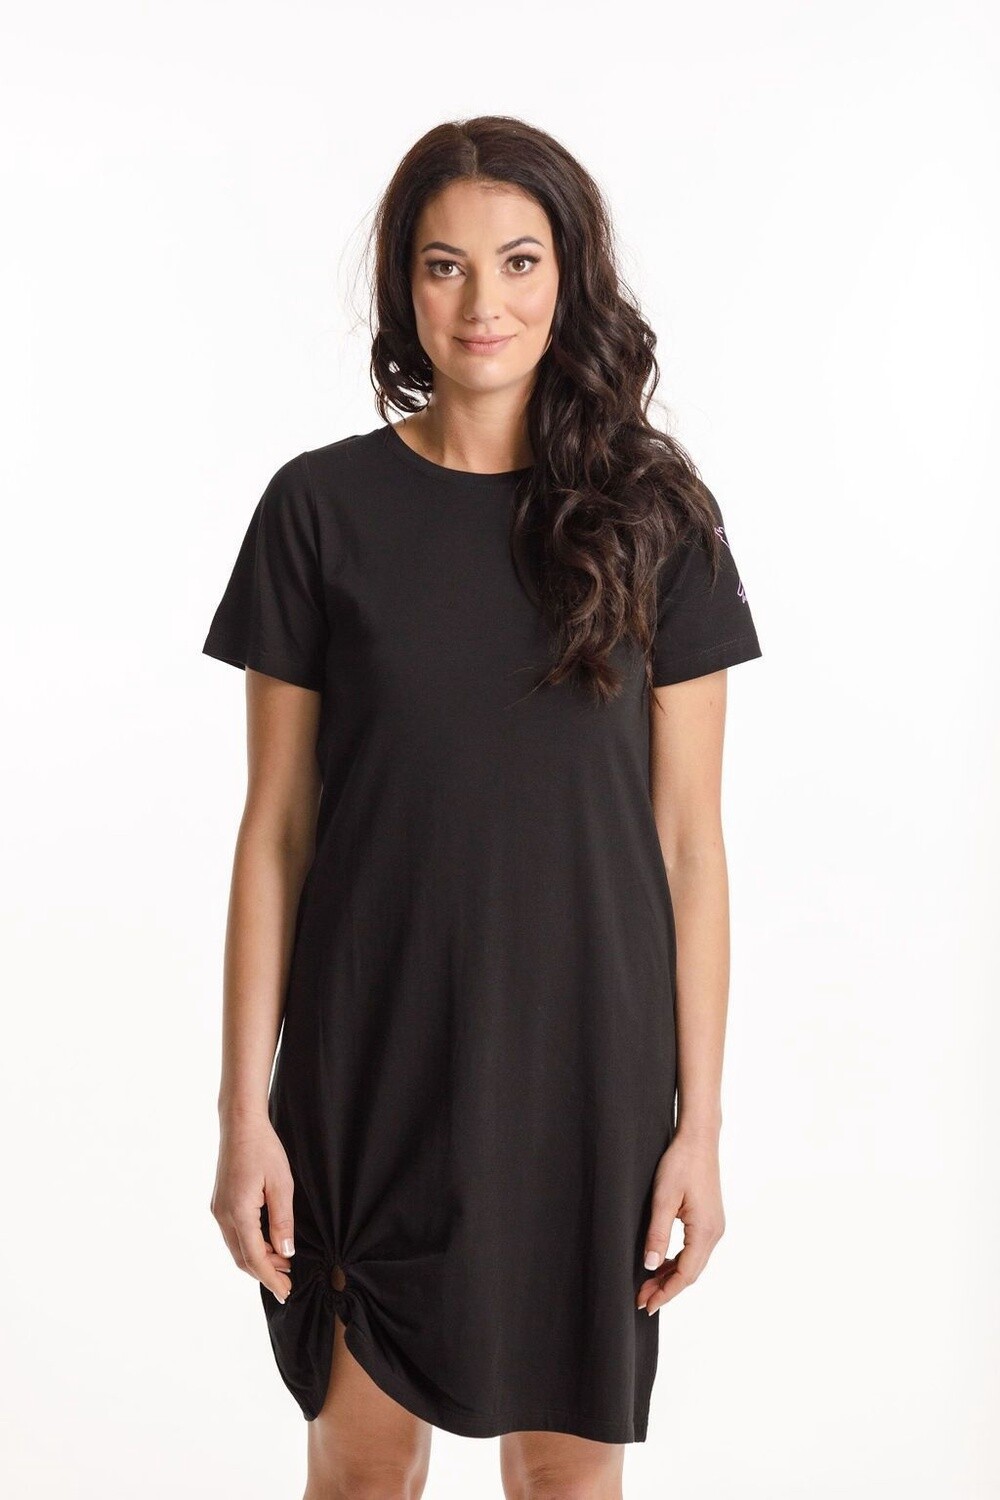 Home-lee Jane Dress - black with peach sorbet X outline on sleeve